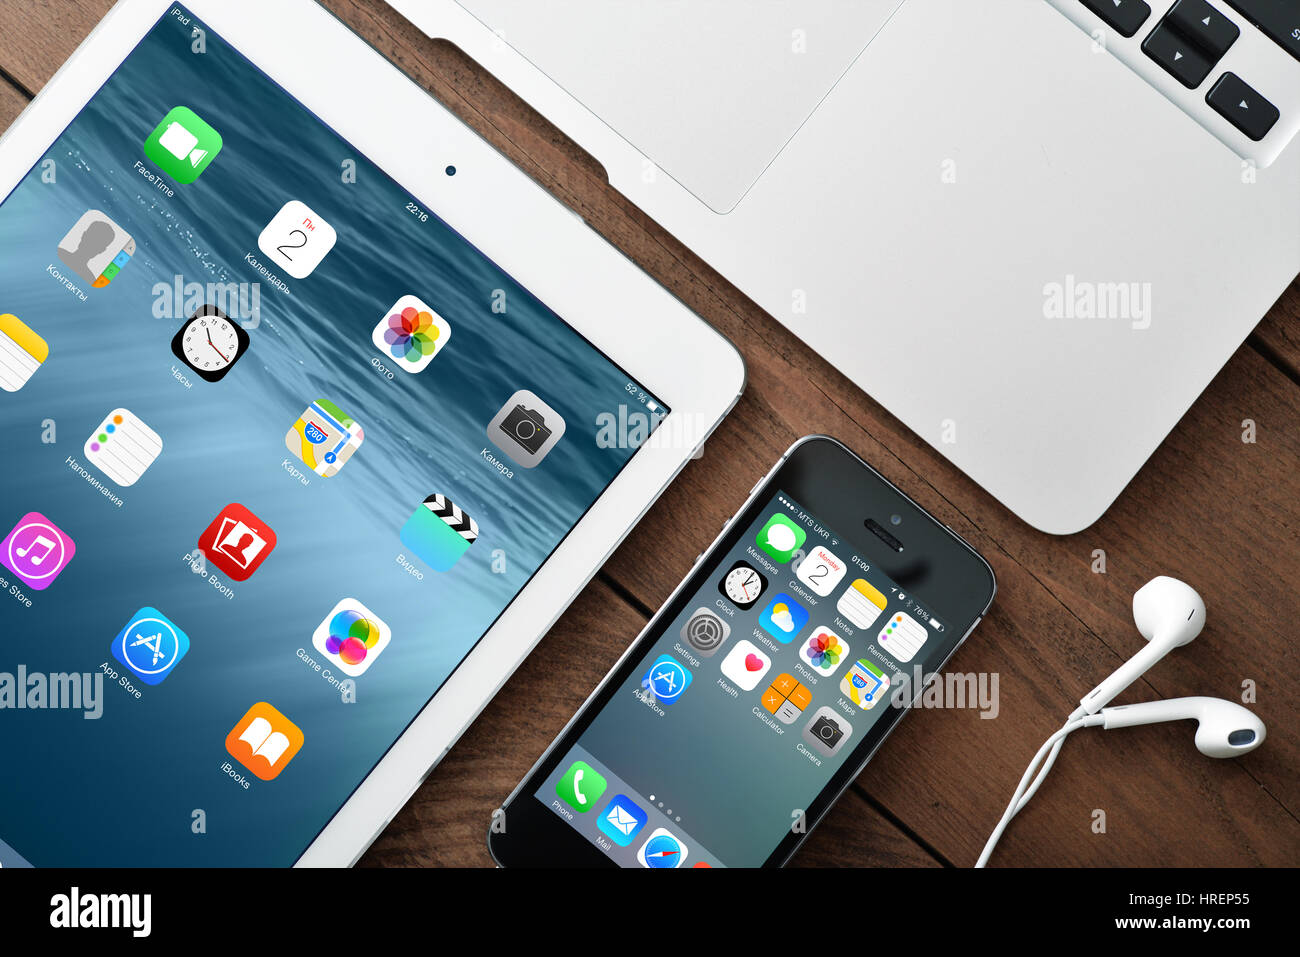 KIEV, UKRAINE - JANUARY 29, 2015: Apple iPhone 5s, iPad Air 2 and MacBook Air on table. Apple Inc. is an American multinational corporation that desig Stock Photo